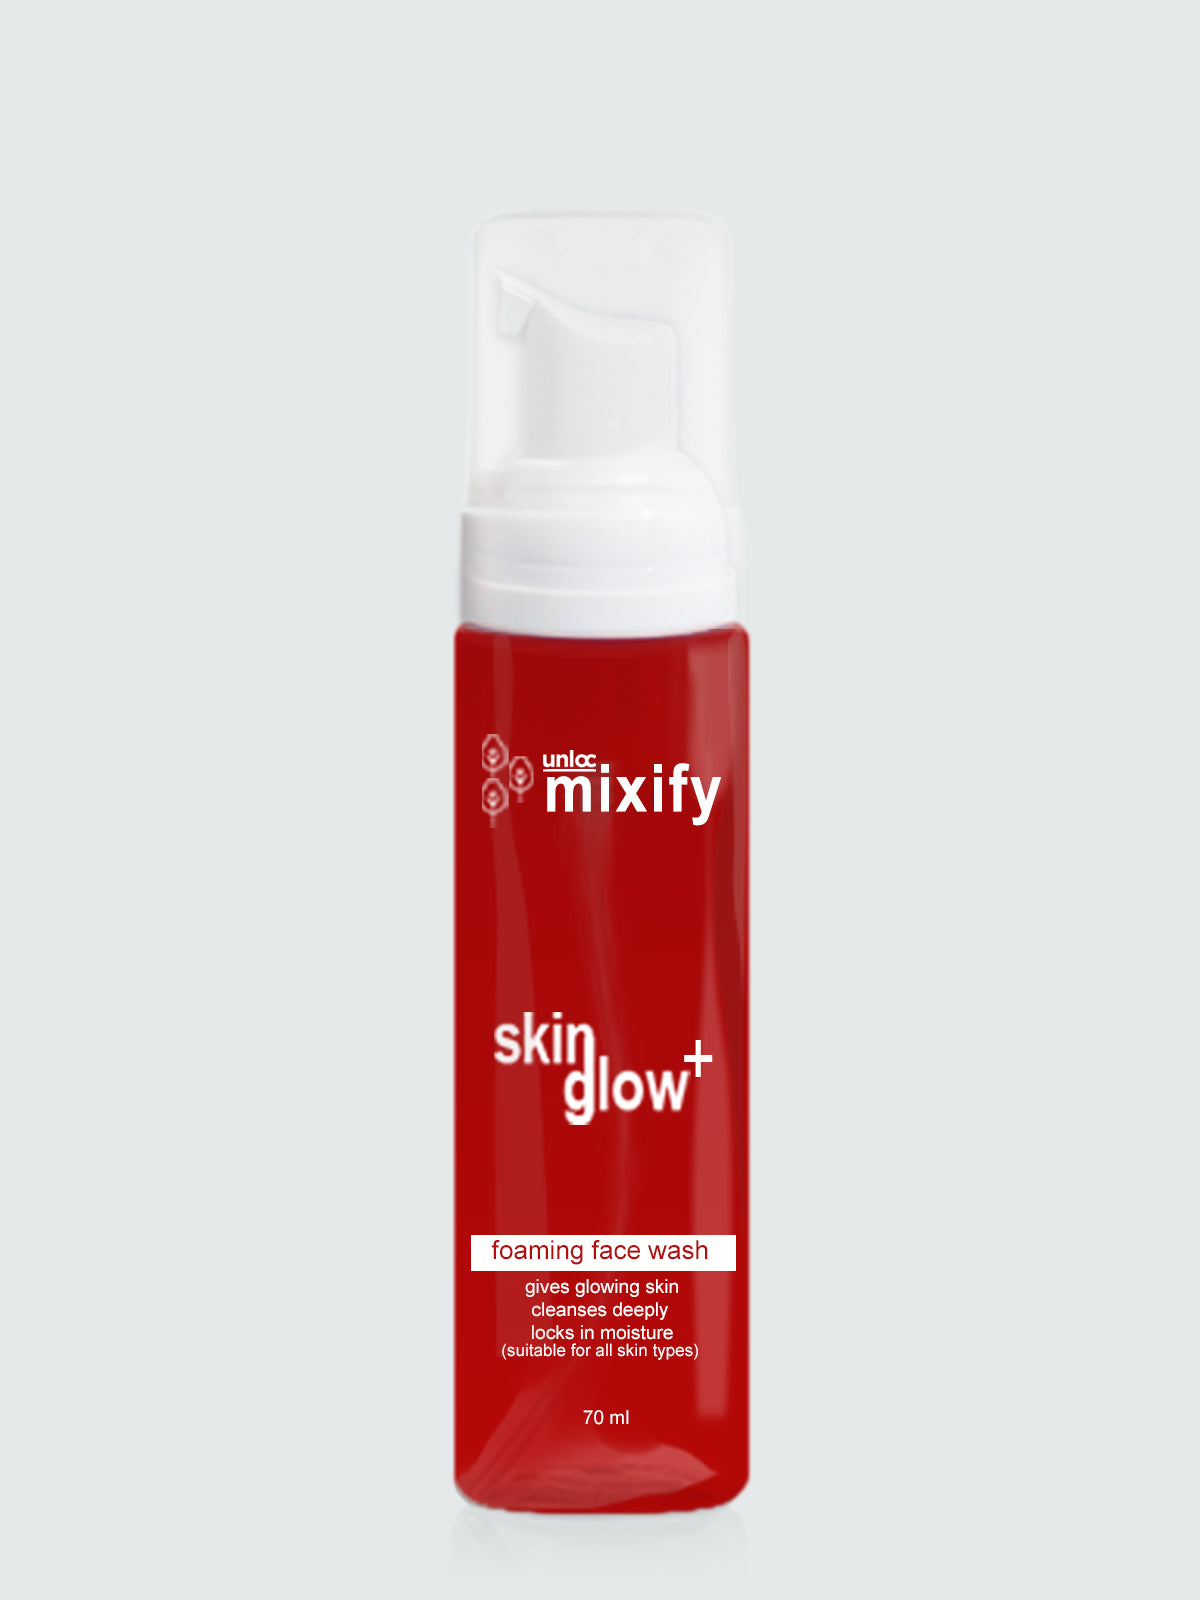 Unloc Mixify Skin Glow+ Foaming Face Wash